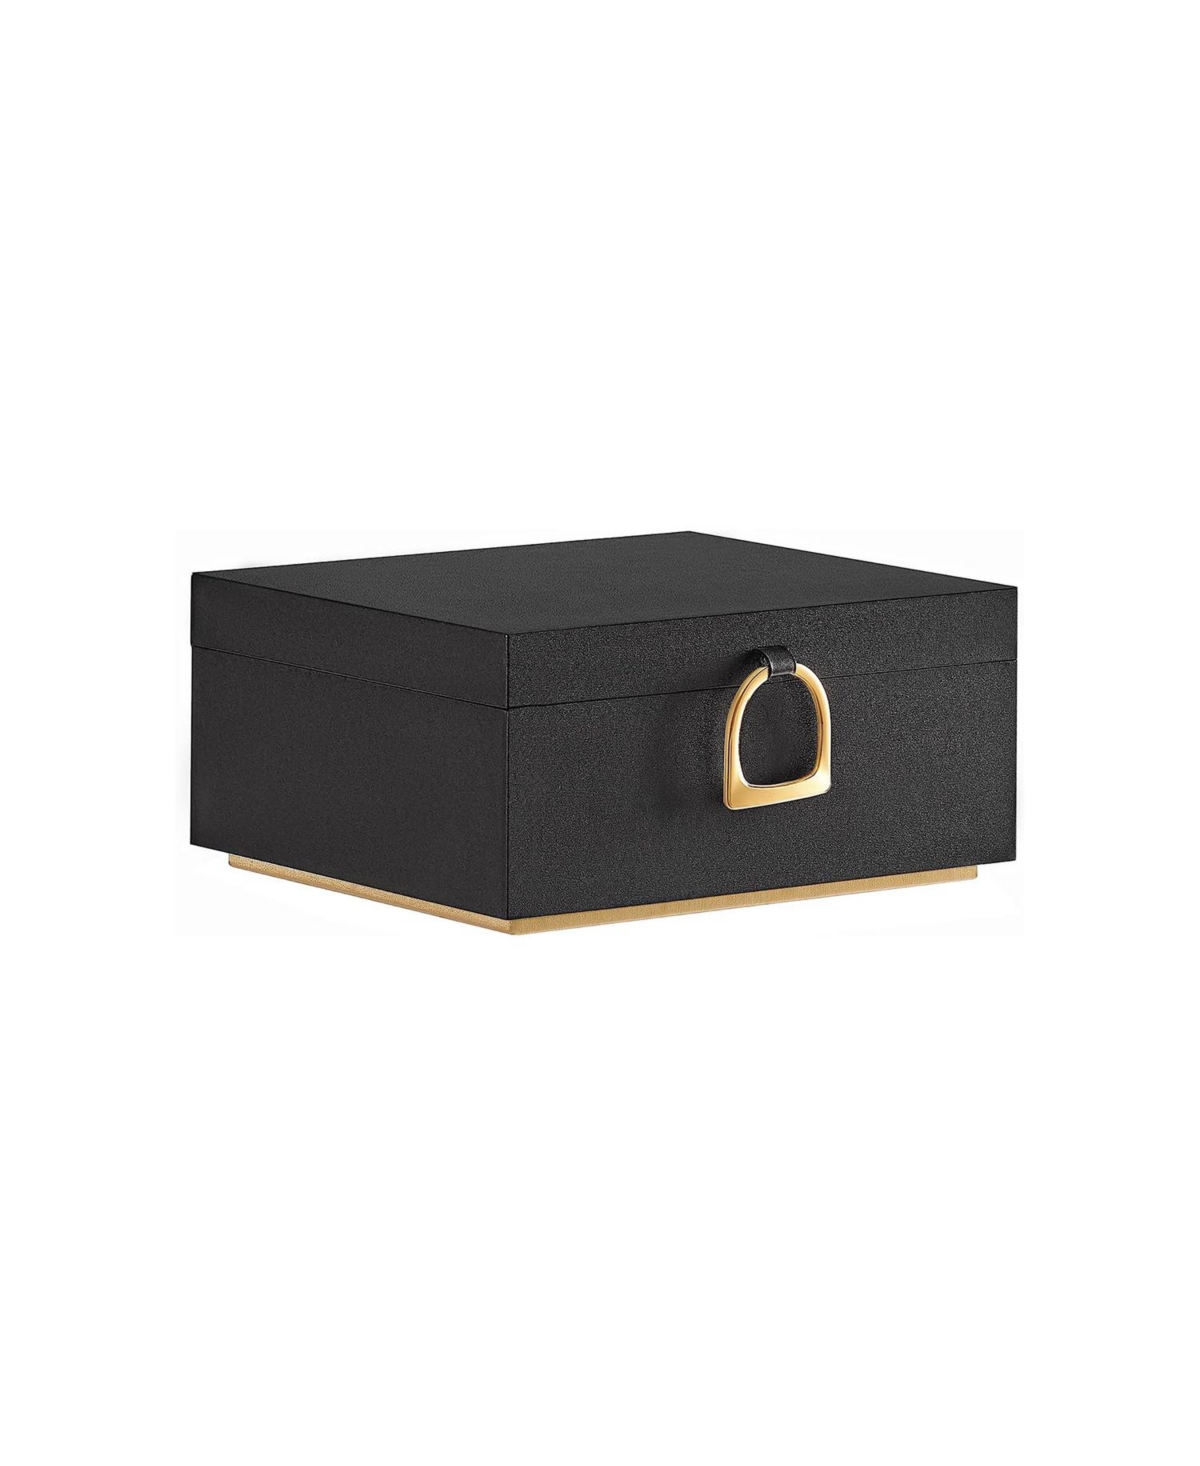 2-layer Jewelry Box, Jewelry Organizer With Handle, Removable Jewelry Tray - White